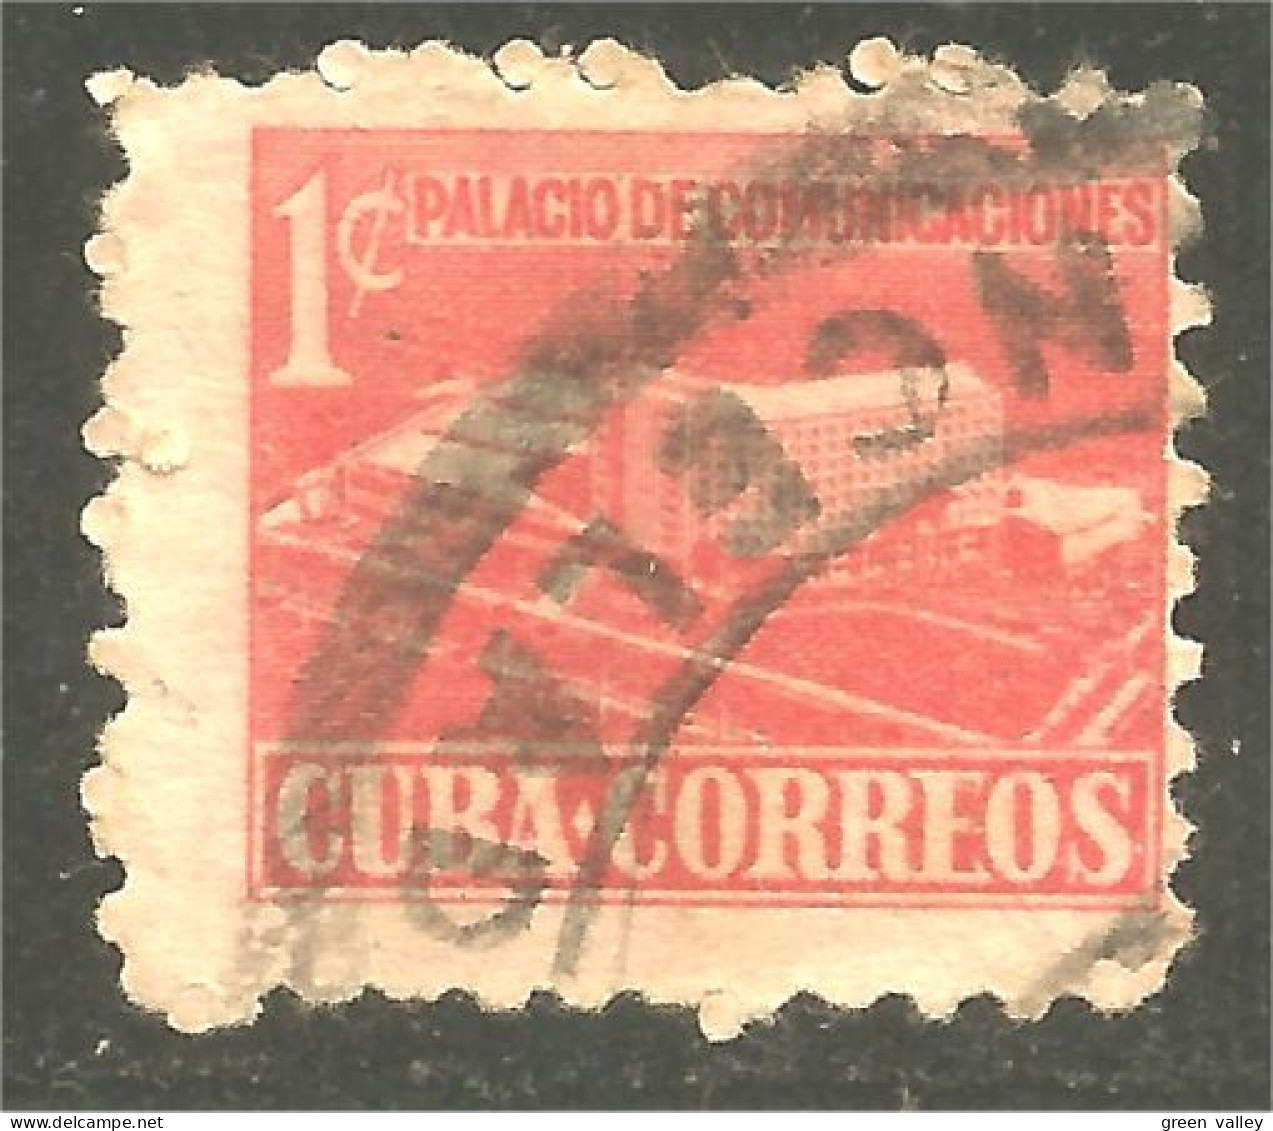 XW01-1984 Cuba Postal Tax Stamp 1952 1c Carmine Rose Carmin - Beneficiencia (Sellos De)